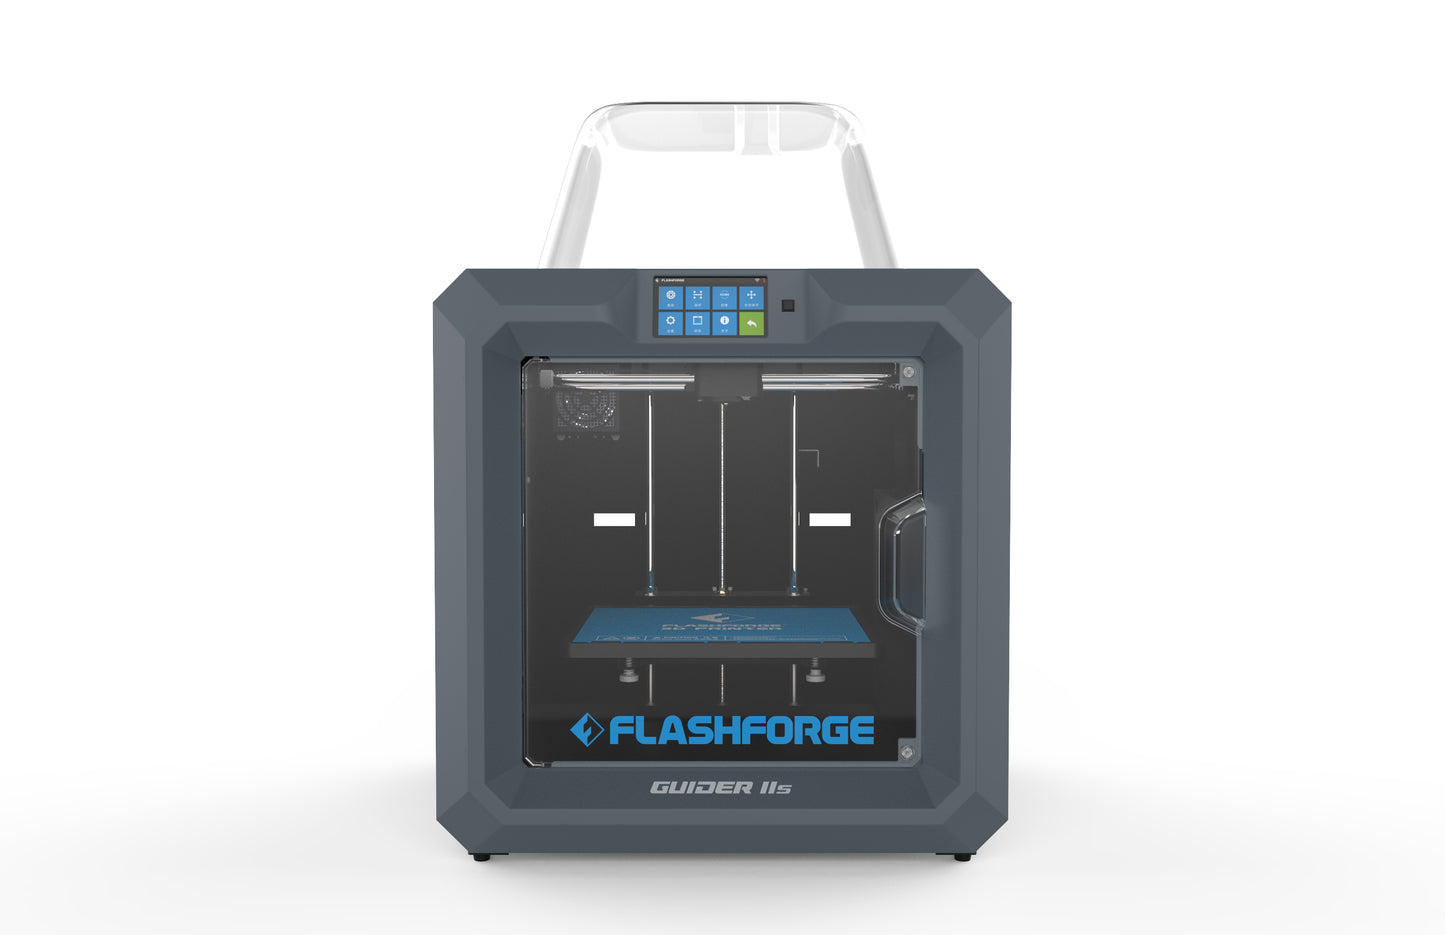 Flashforge's Guider 2s